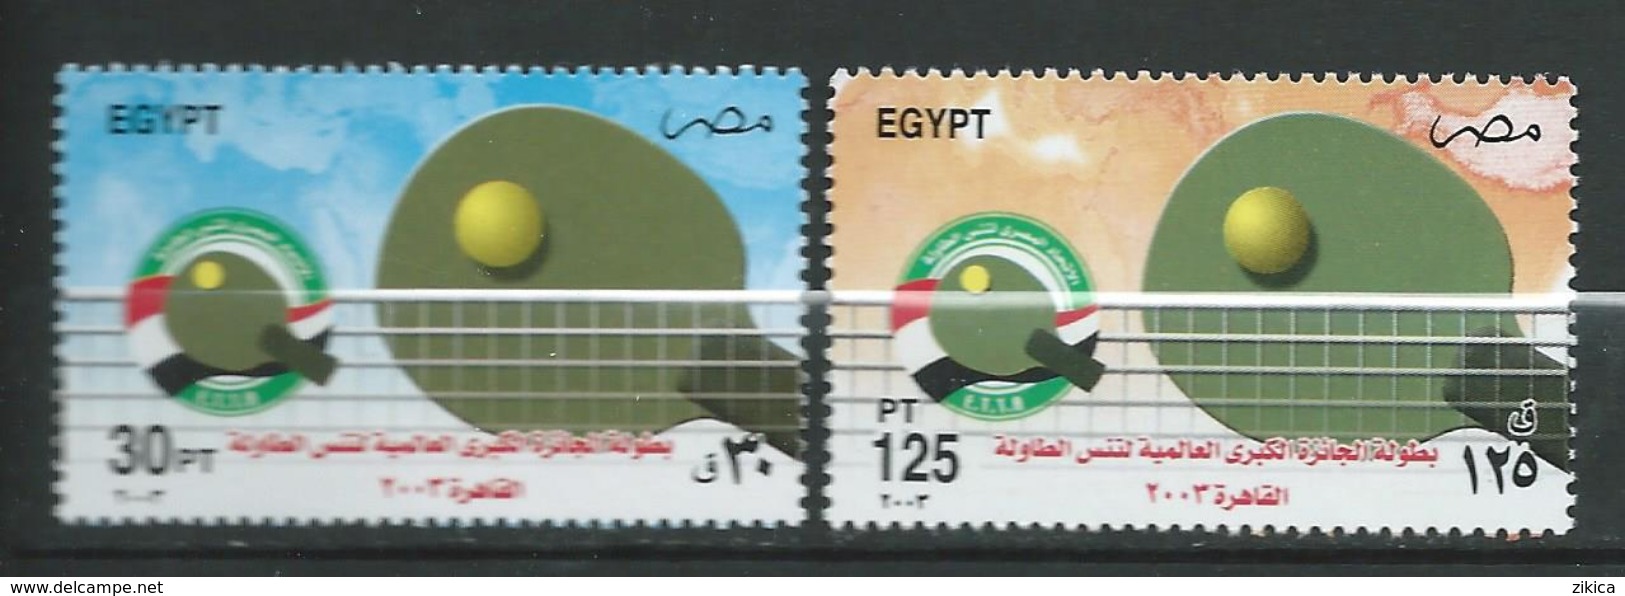 Egypt 2003 Egypt International Open Table Tennis Championship, Cairo. Sport. MNH - Unused Stamps